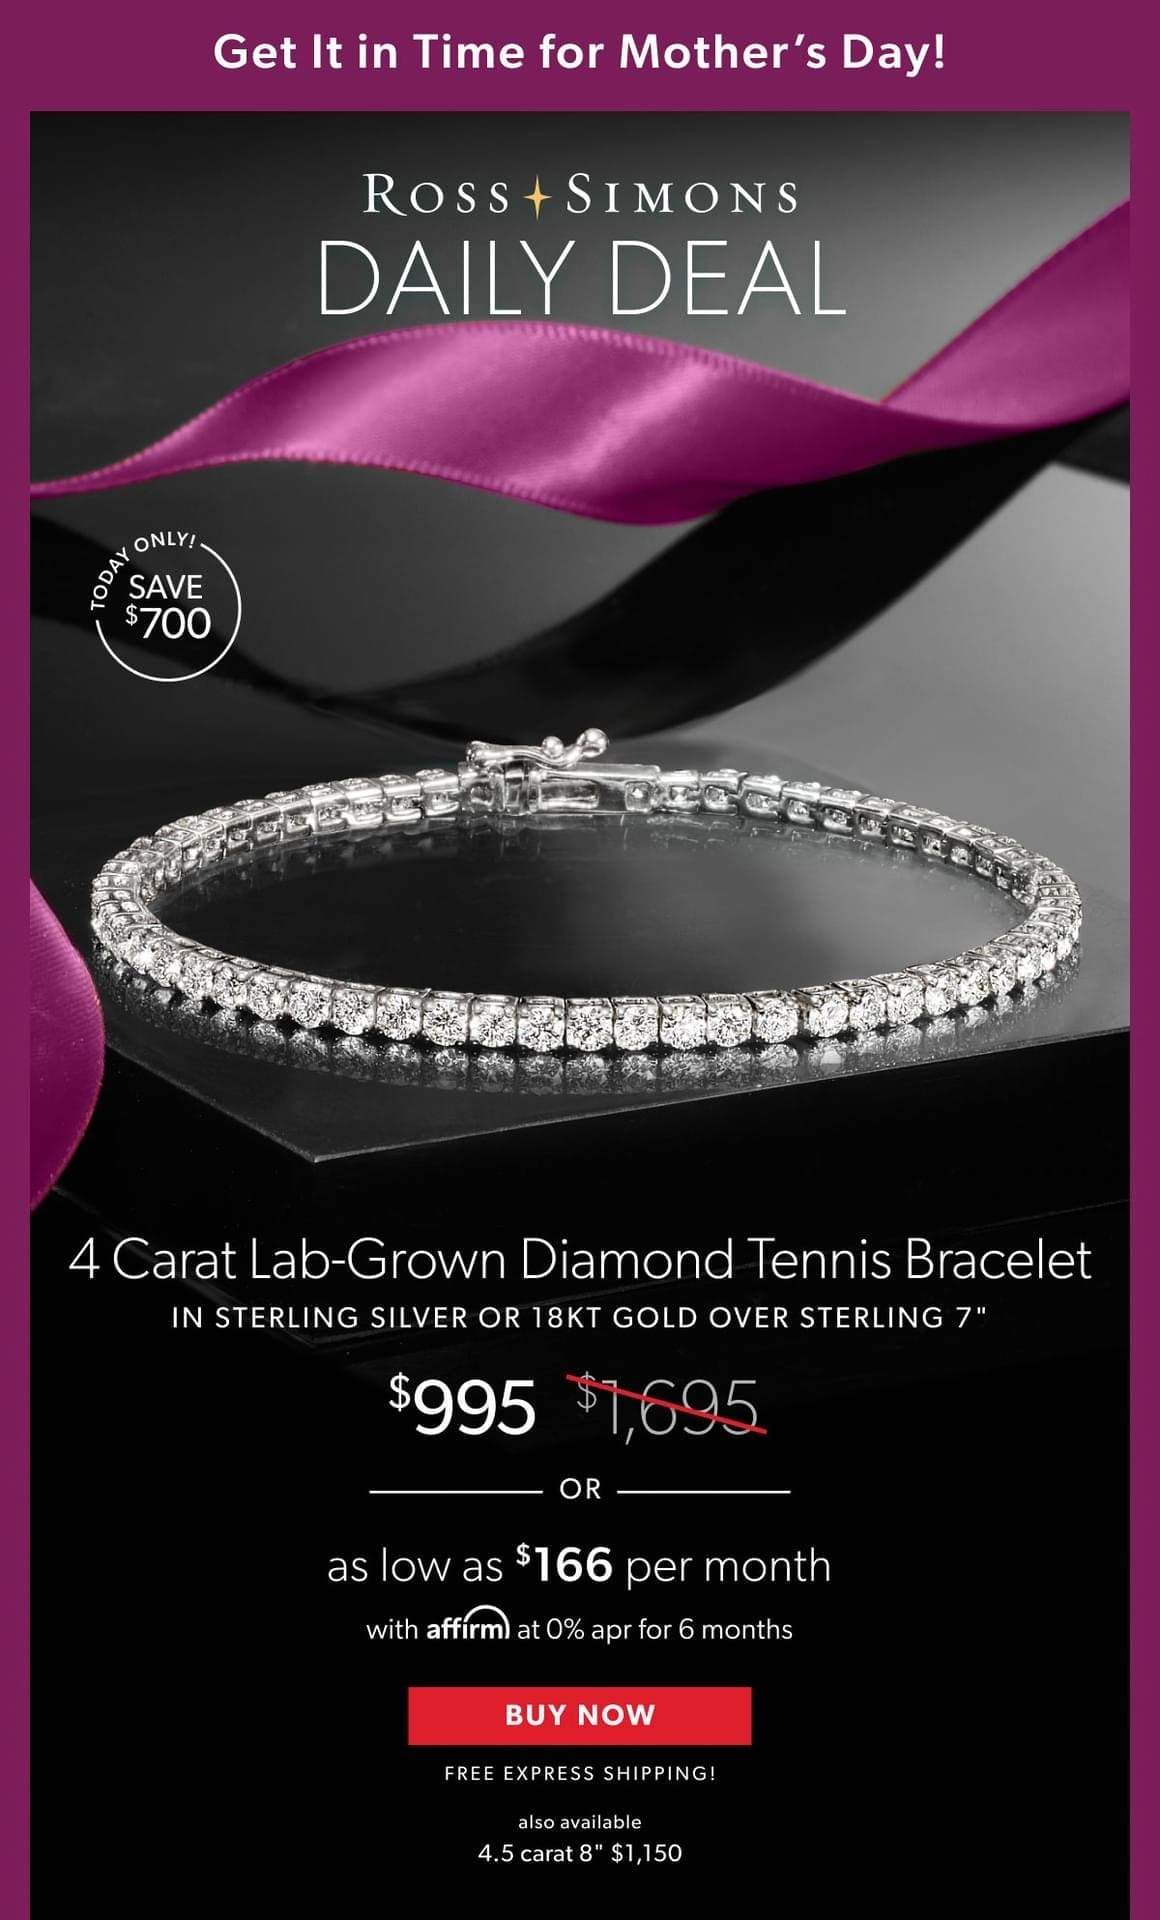 4 Carat Lab-Grown Diamond Tennis Bracelet